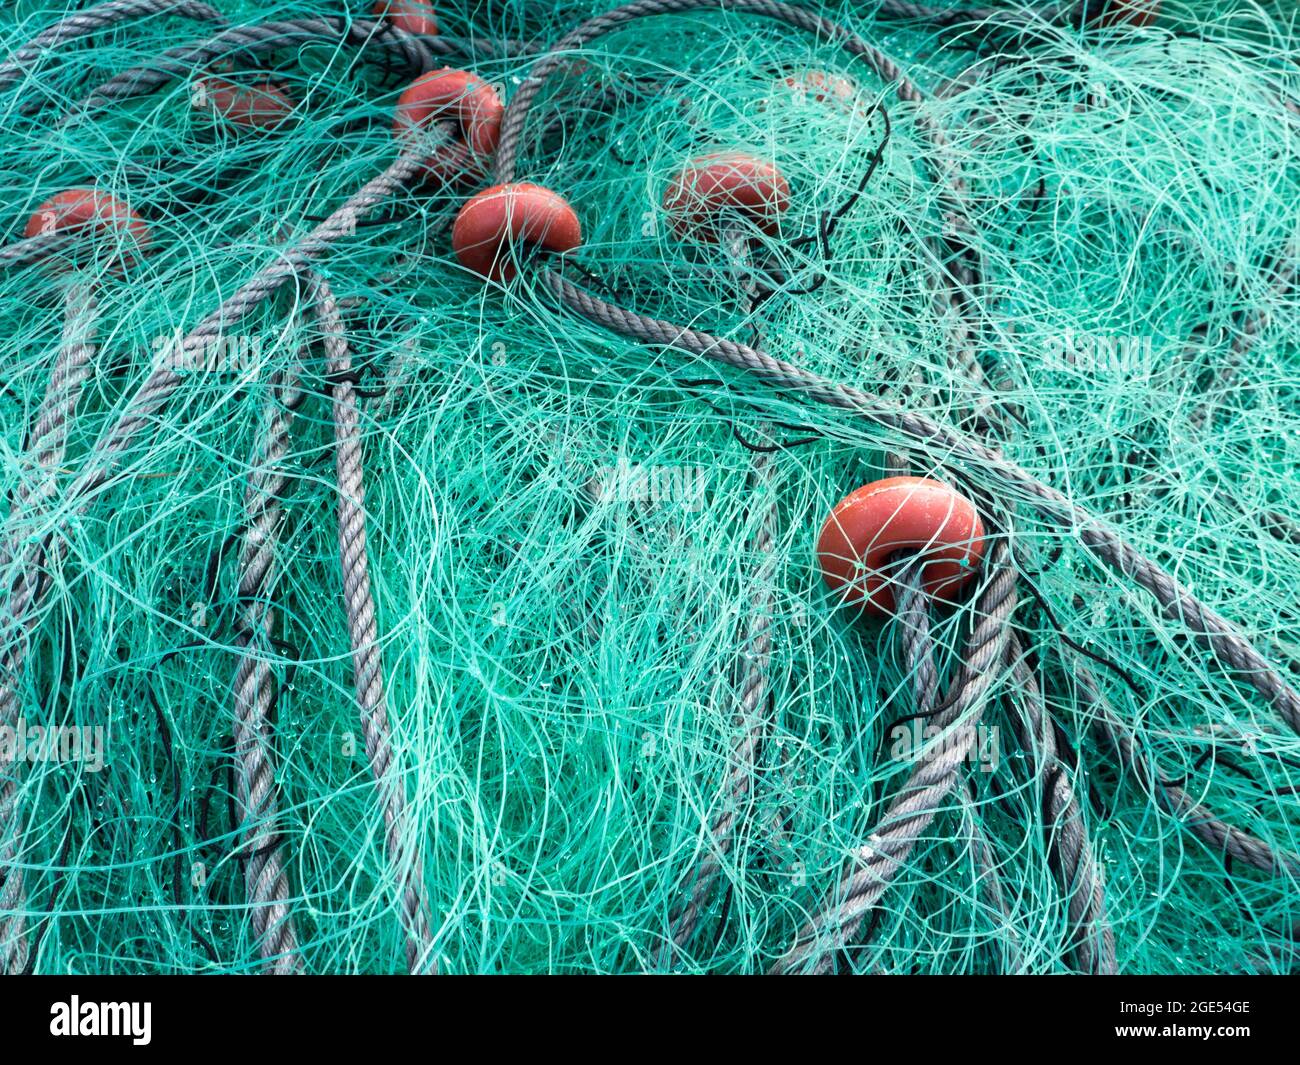 LUARCA, SPAIN - DECEMBER 4, 2016: Green fishing net at the fish market pier in Luarca, Spain. Stock Photo